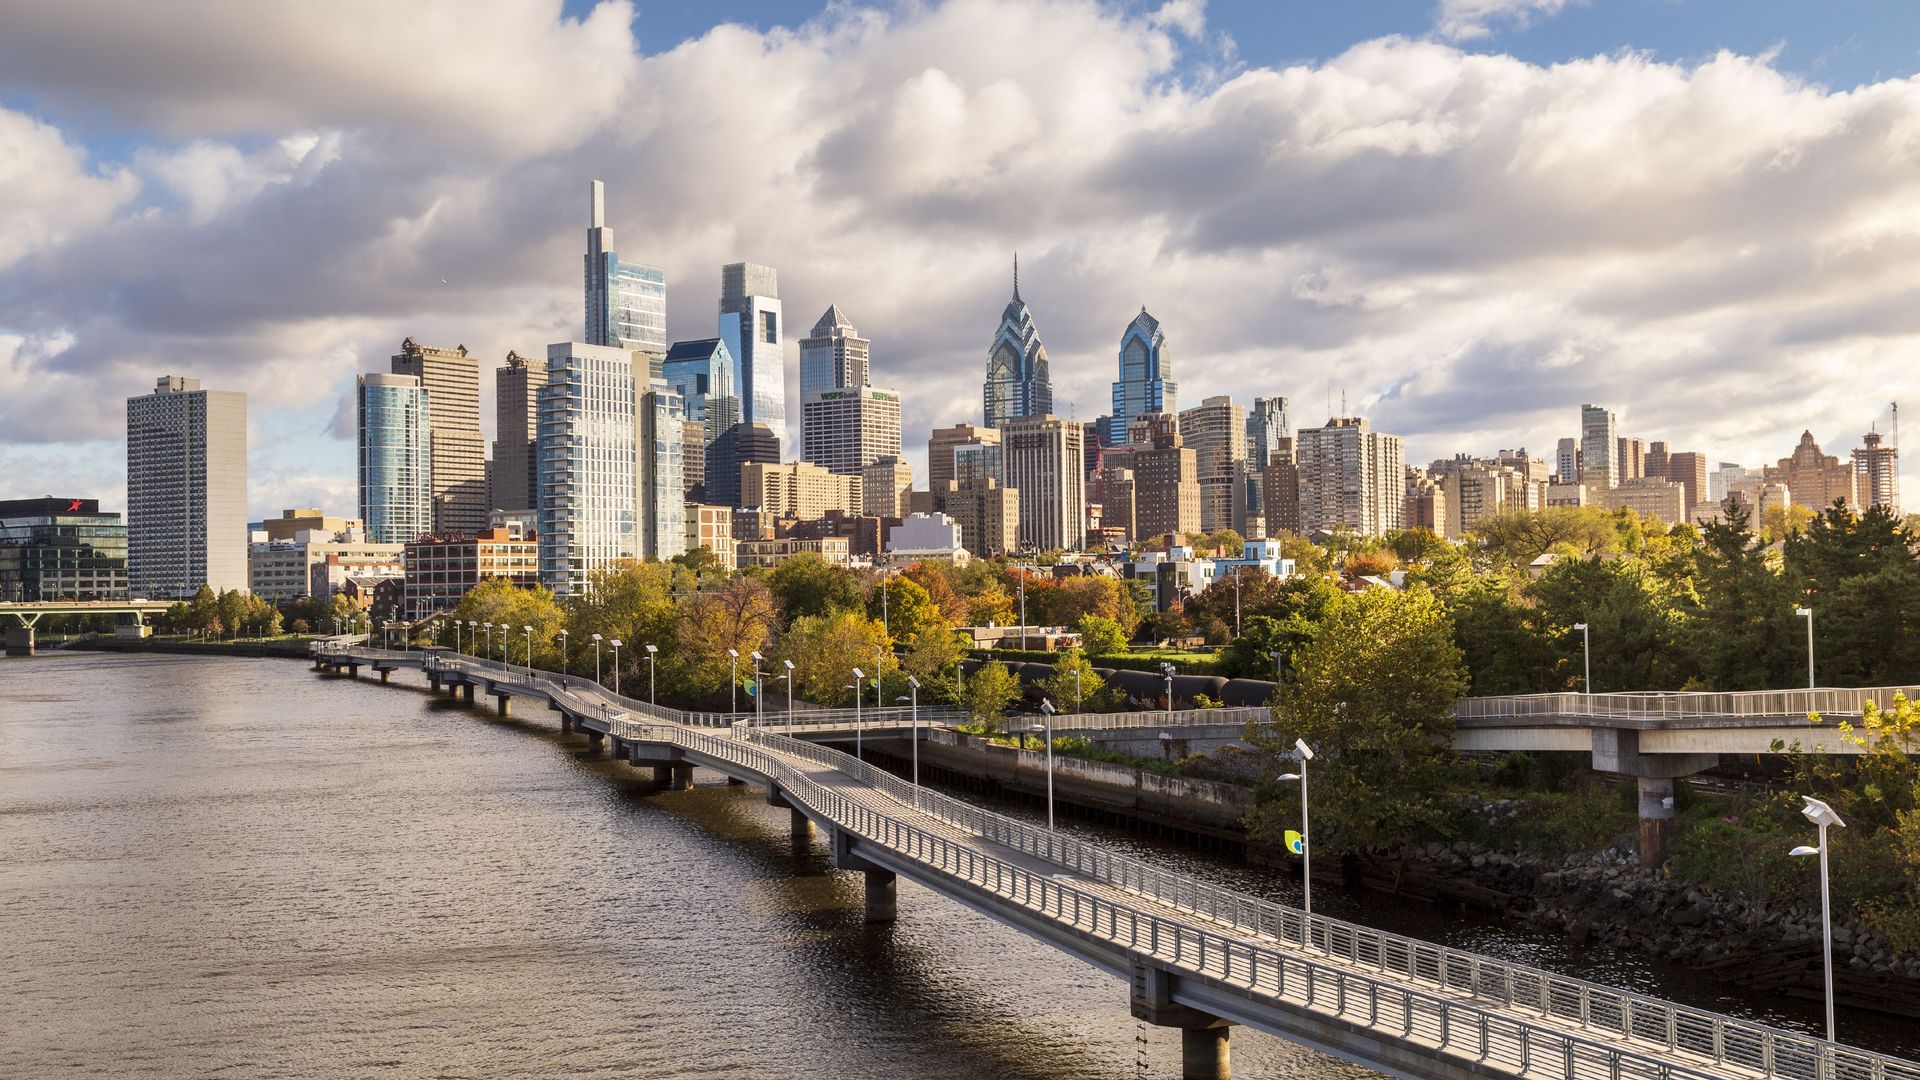 The Philadelphia skyline in autumn. 